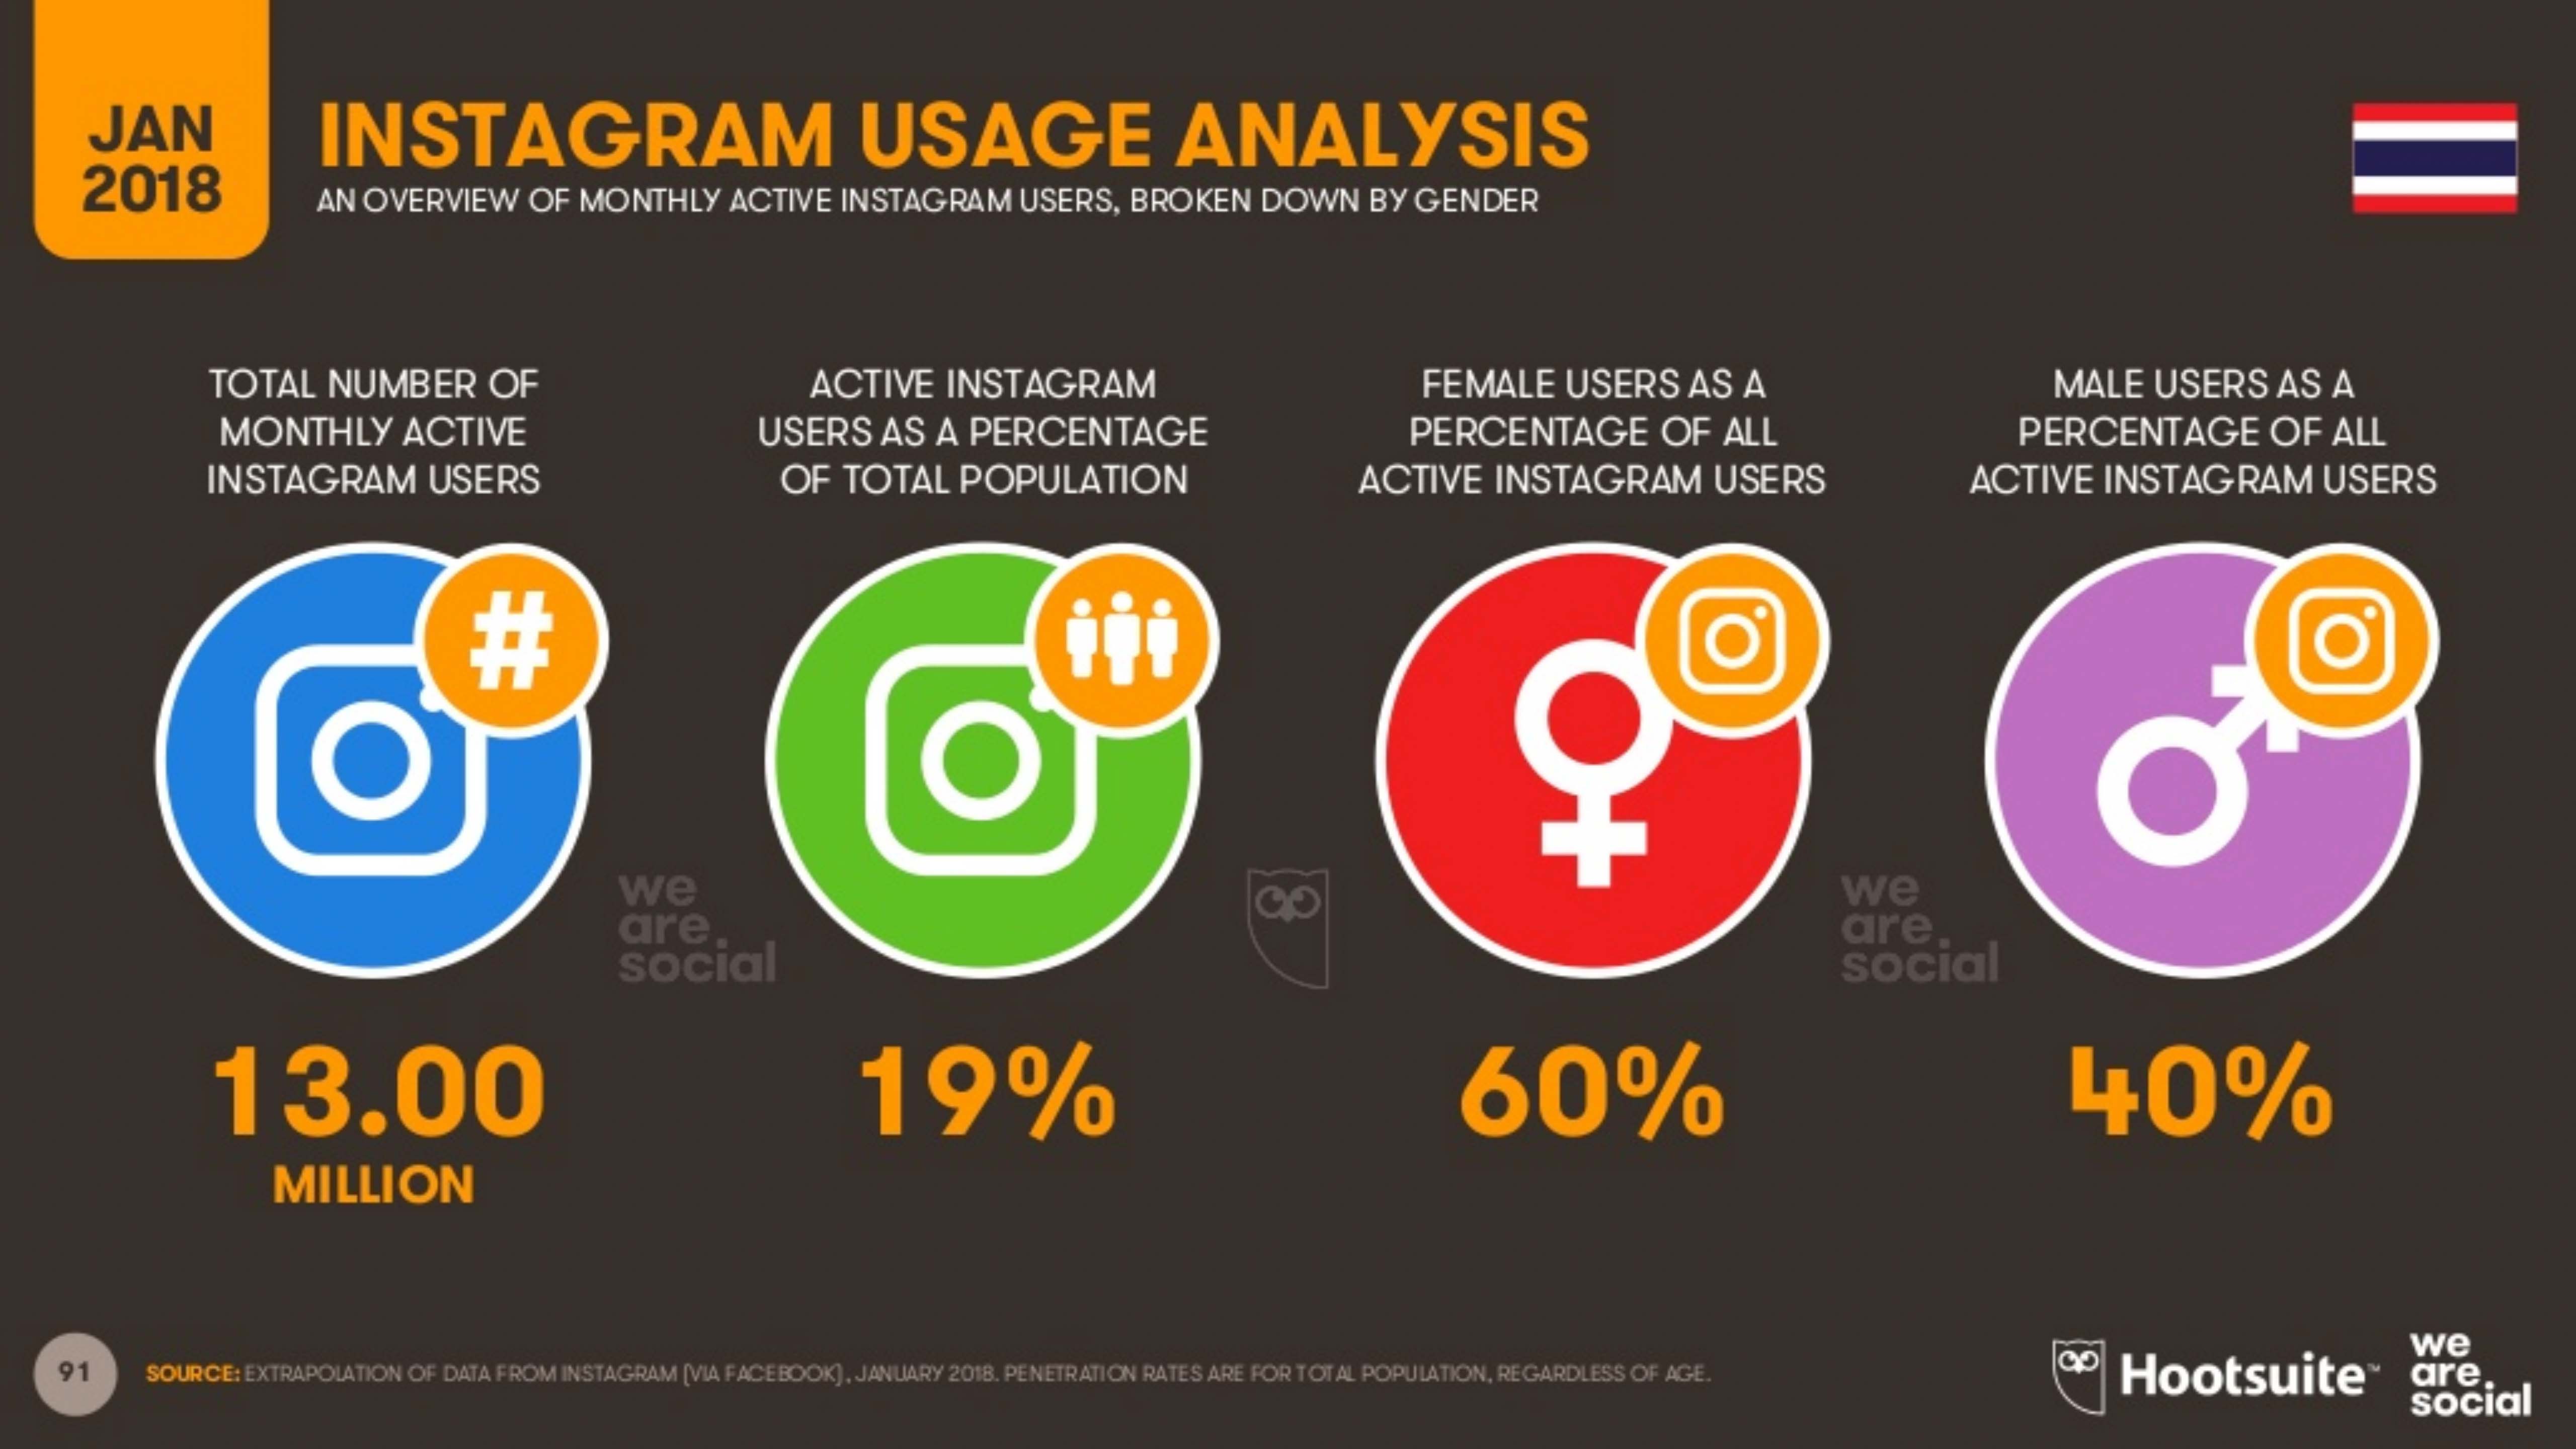 Instagram Usage Analysis